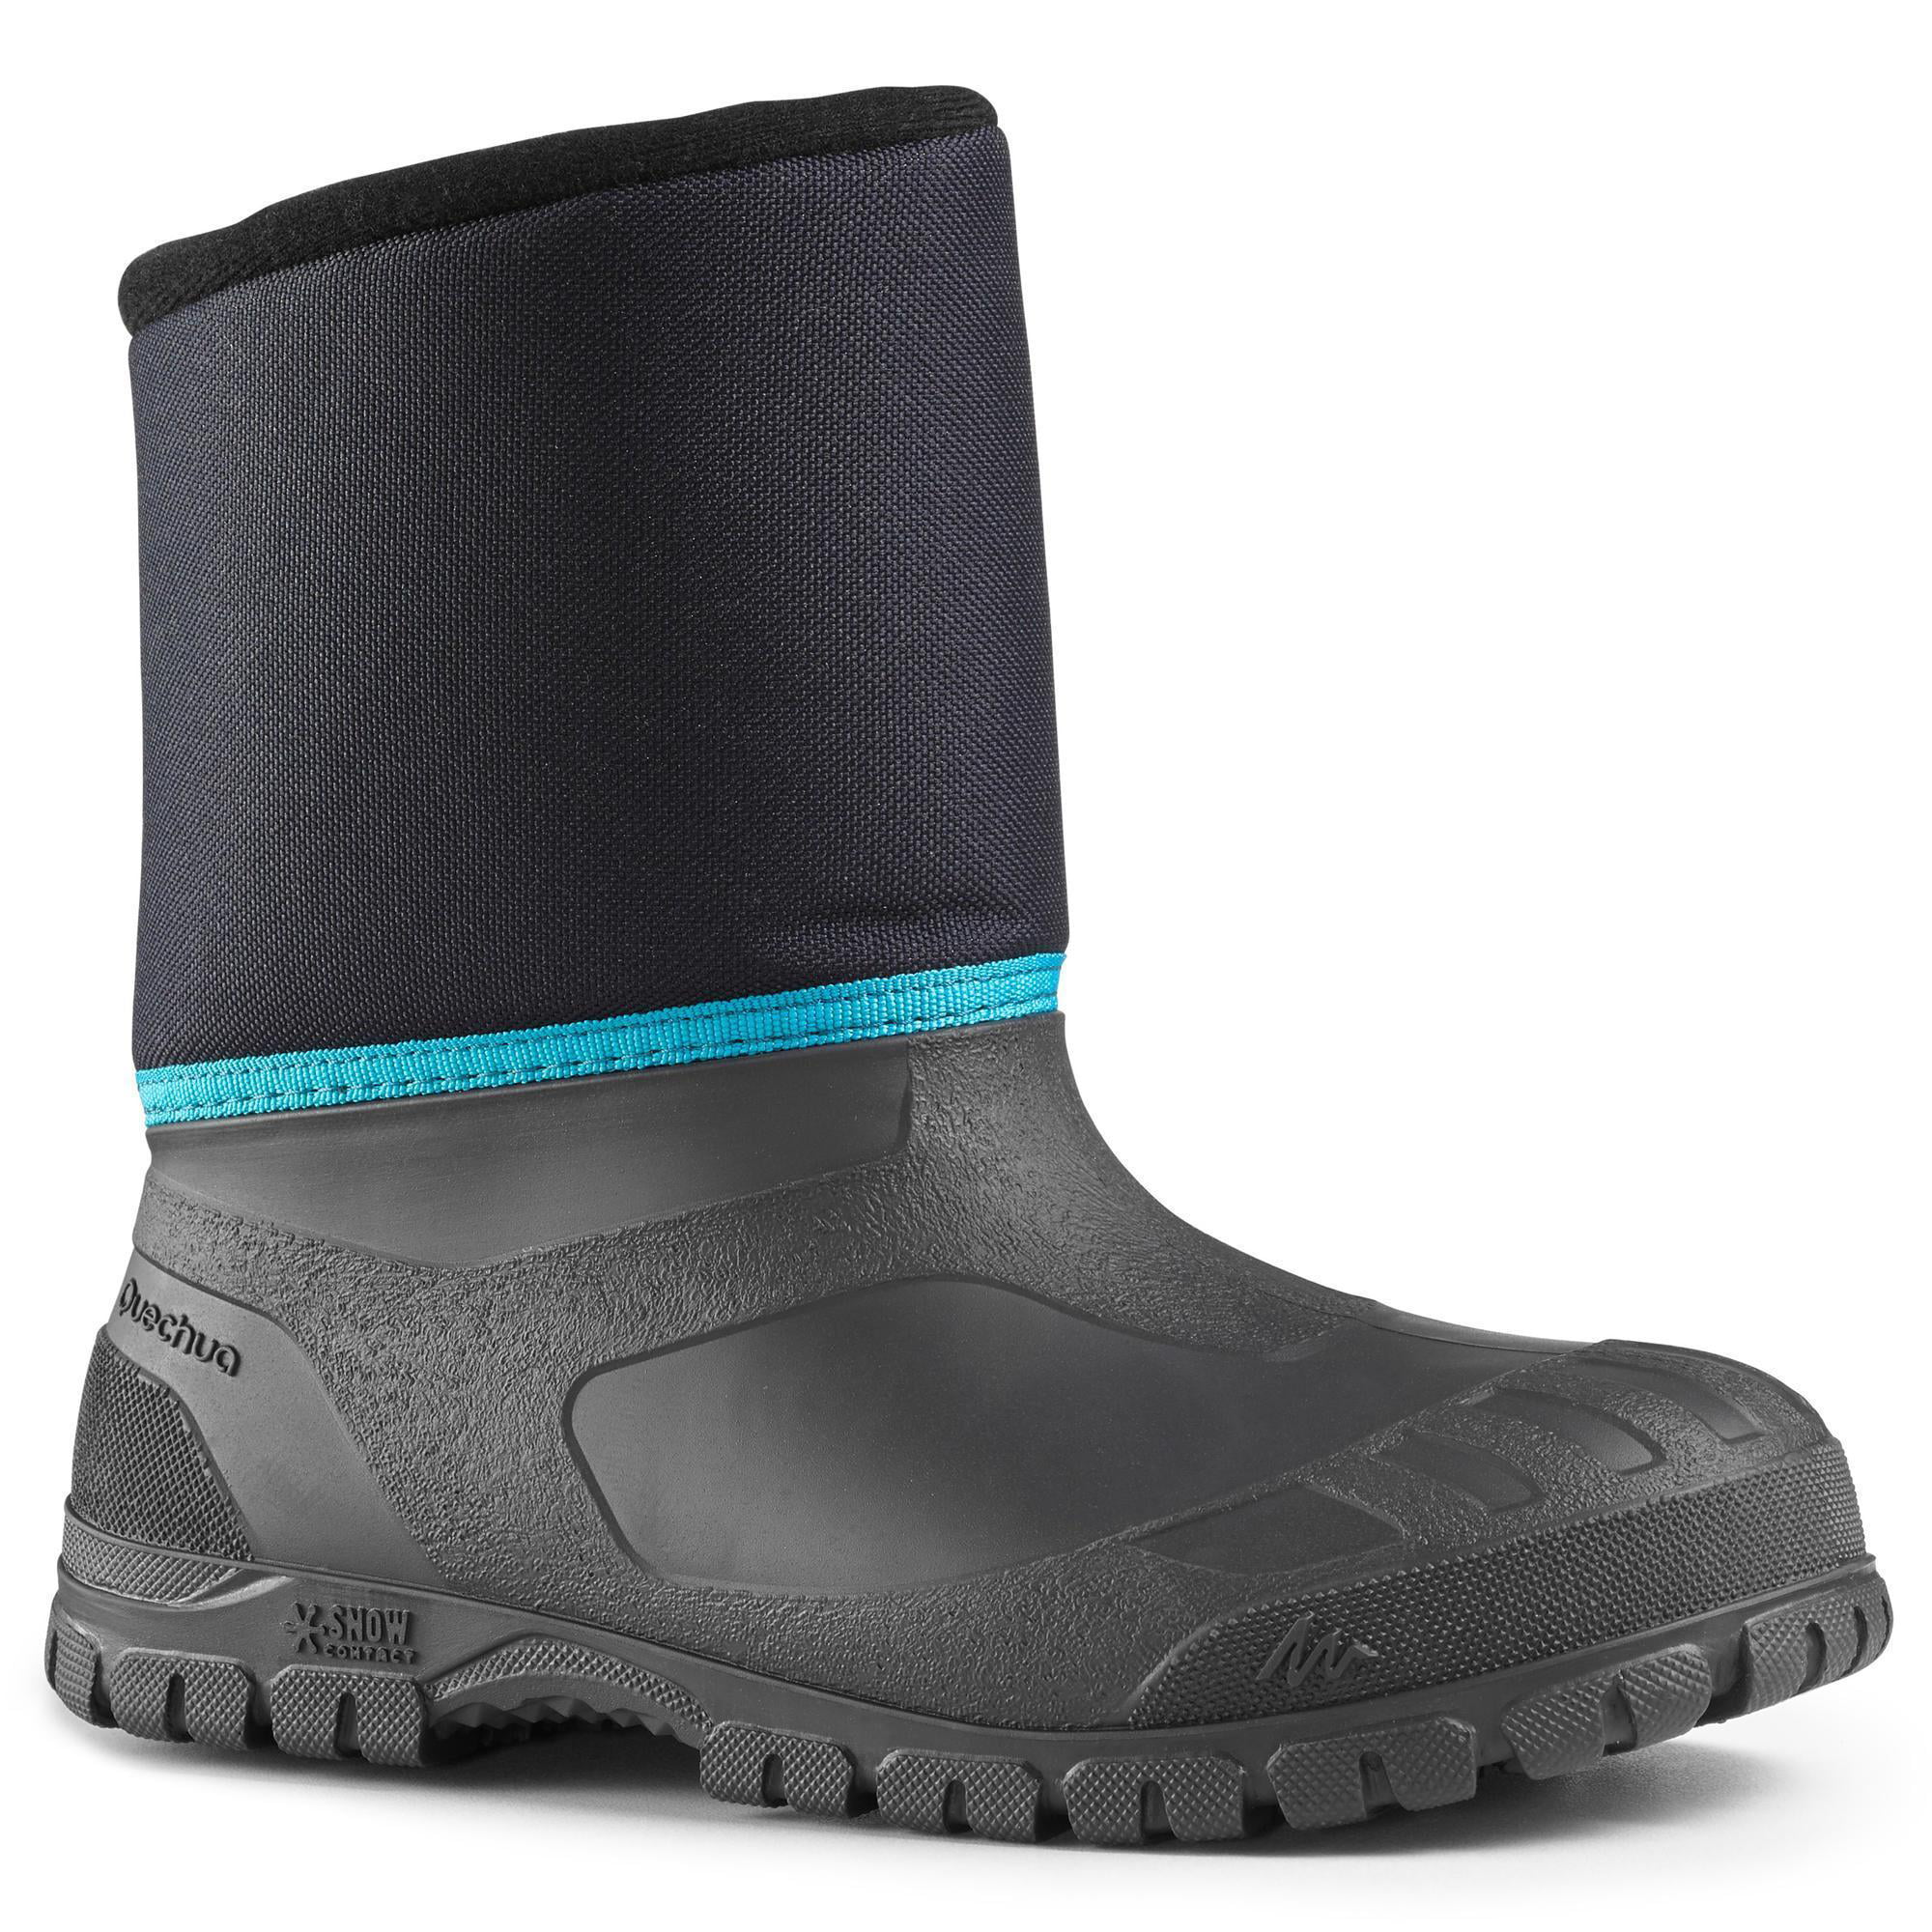 quechua snow boots review